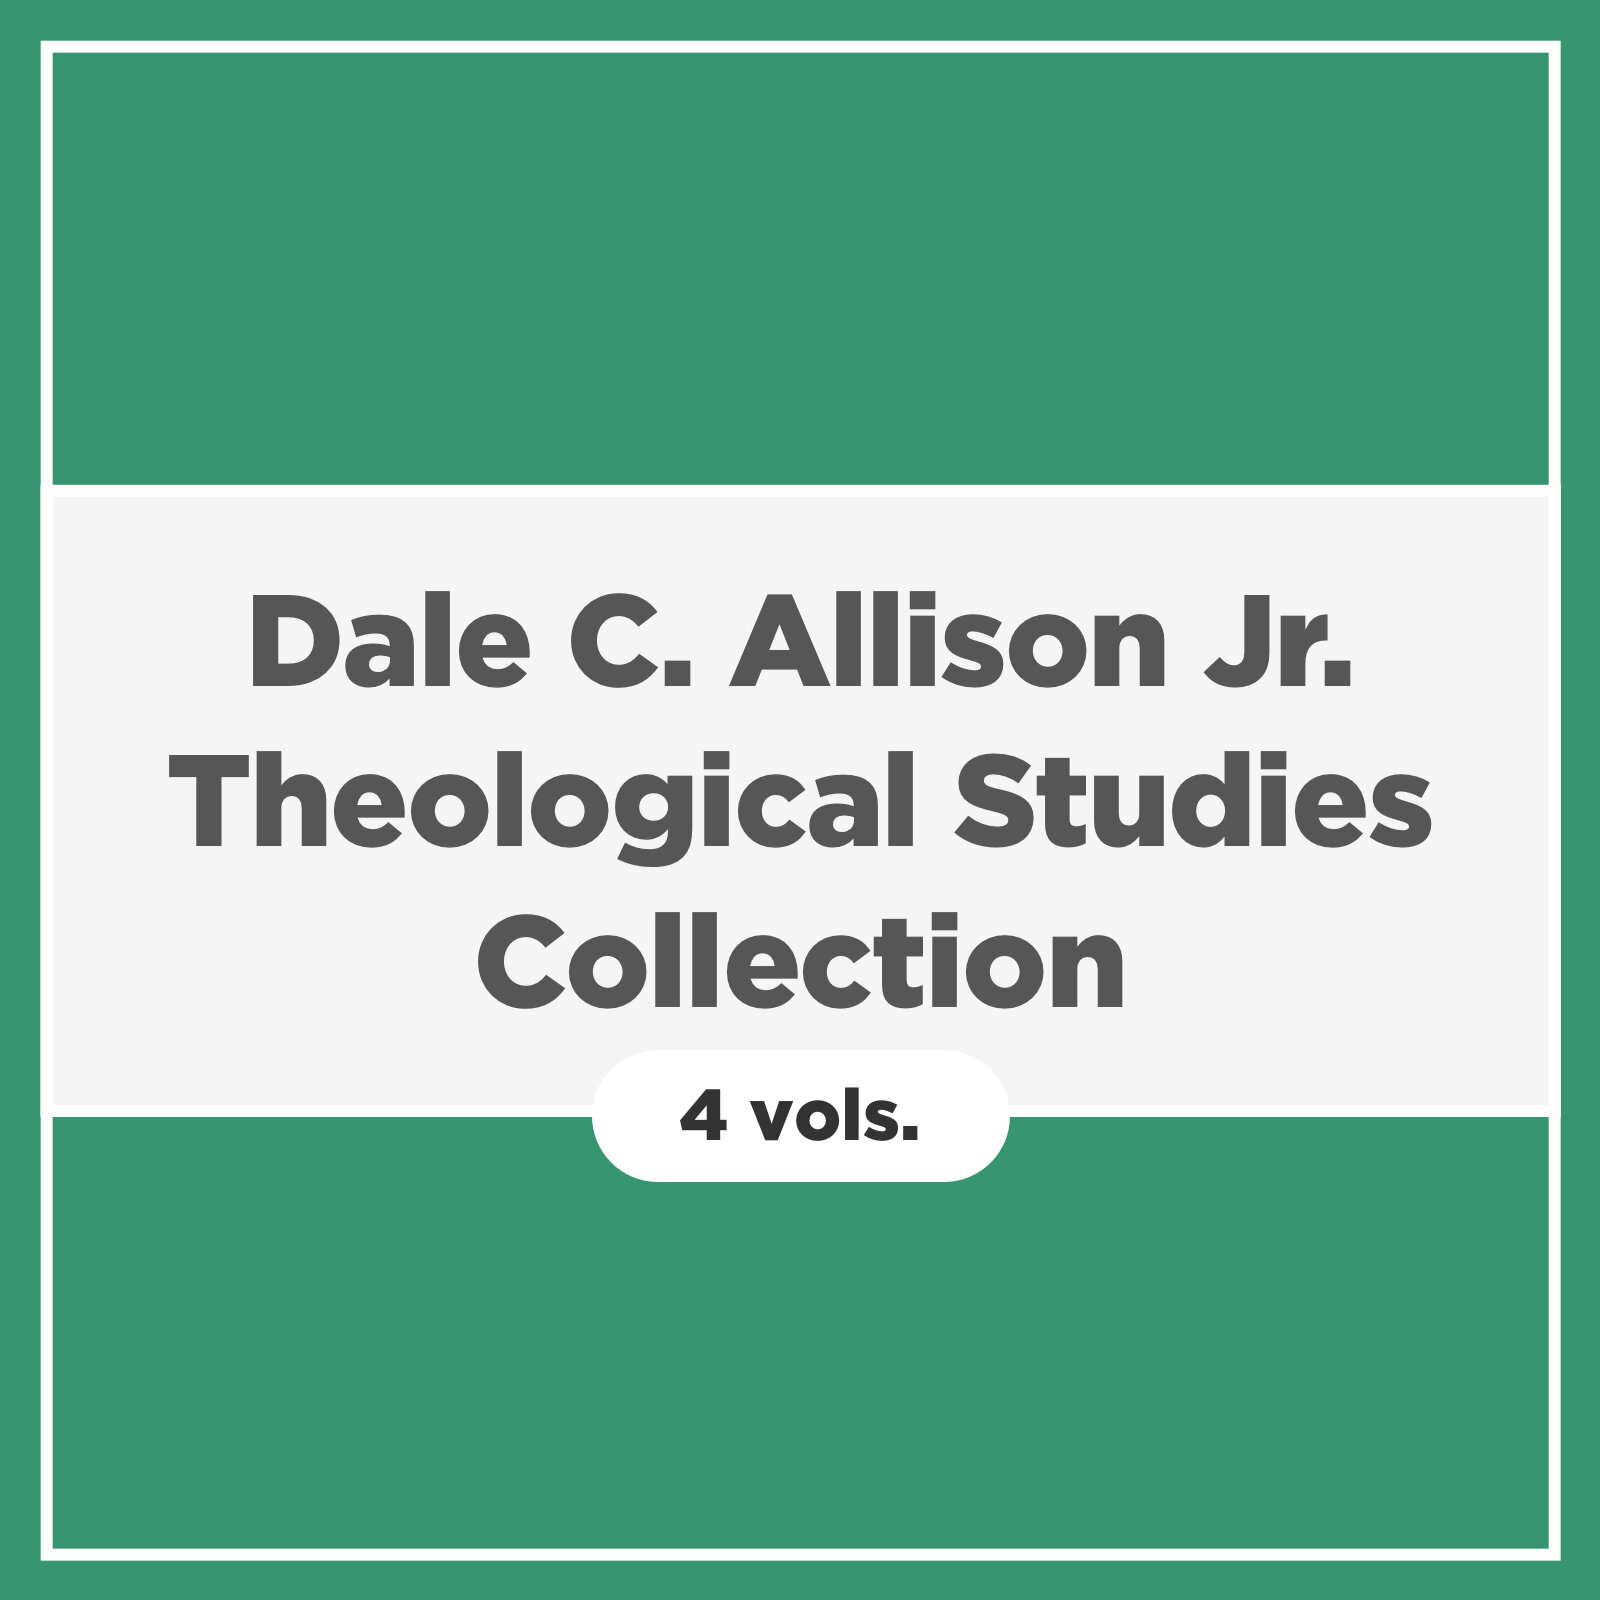 Dale C. Allison Jr. Theological Studies Collection (4 vols.)